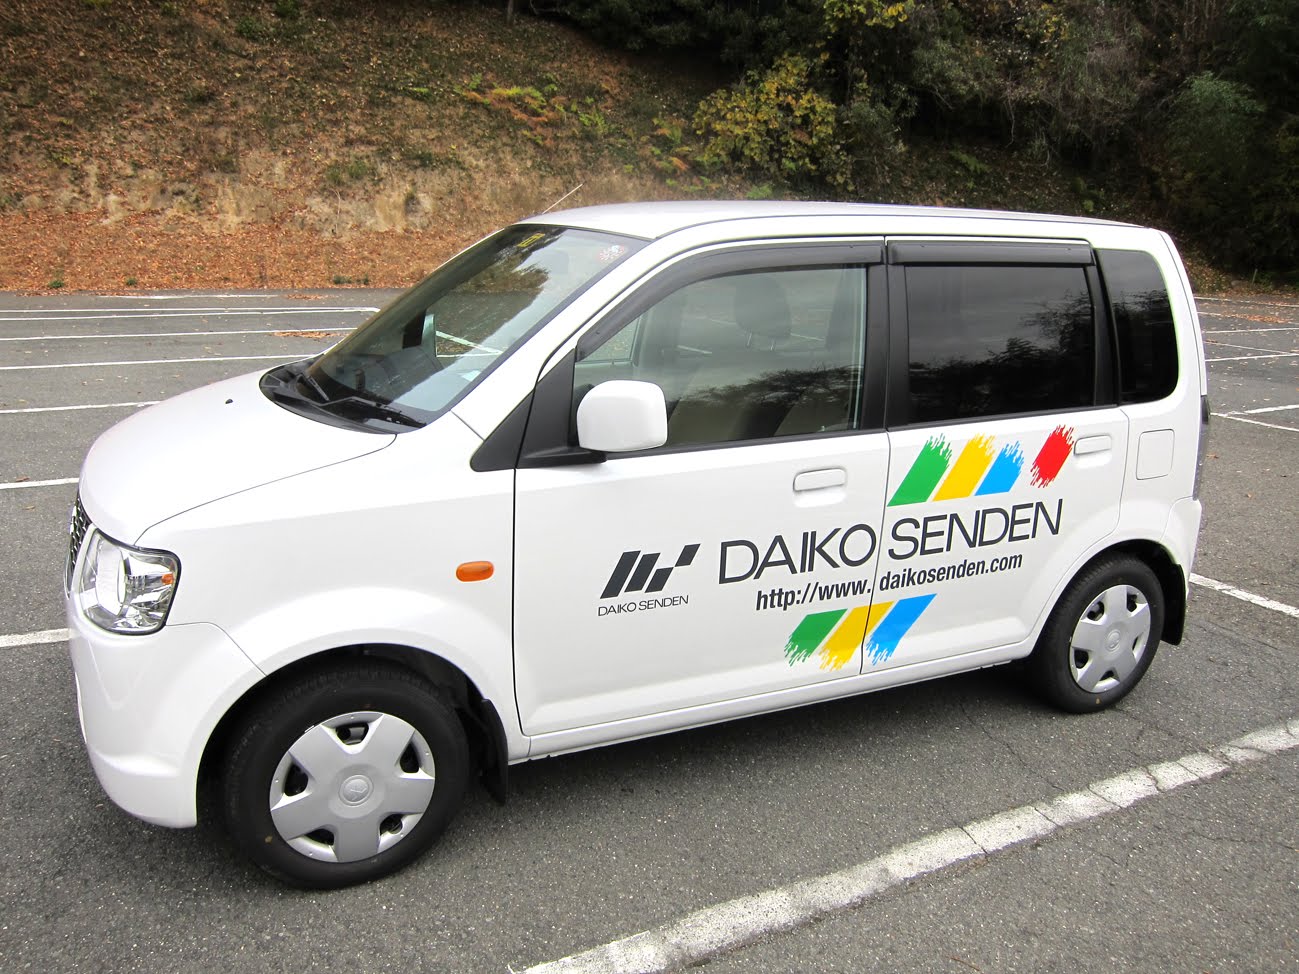 Daikosendenblog 社用車用ラッピング